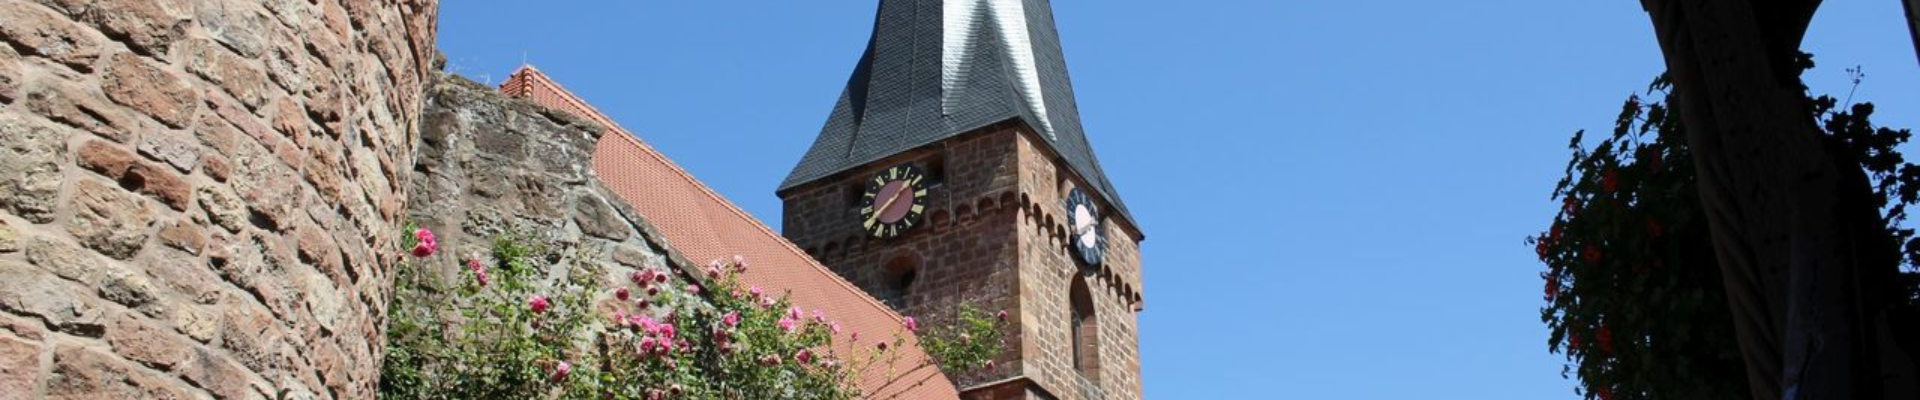 Wehrkirche Sankt Martin Dörrenbach